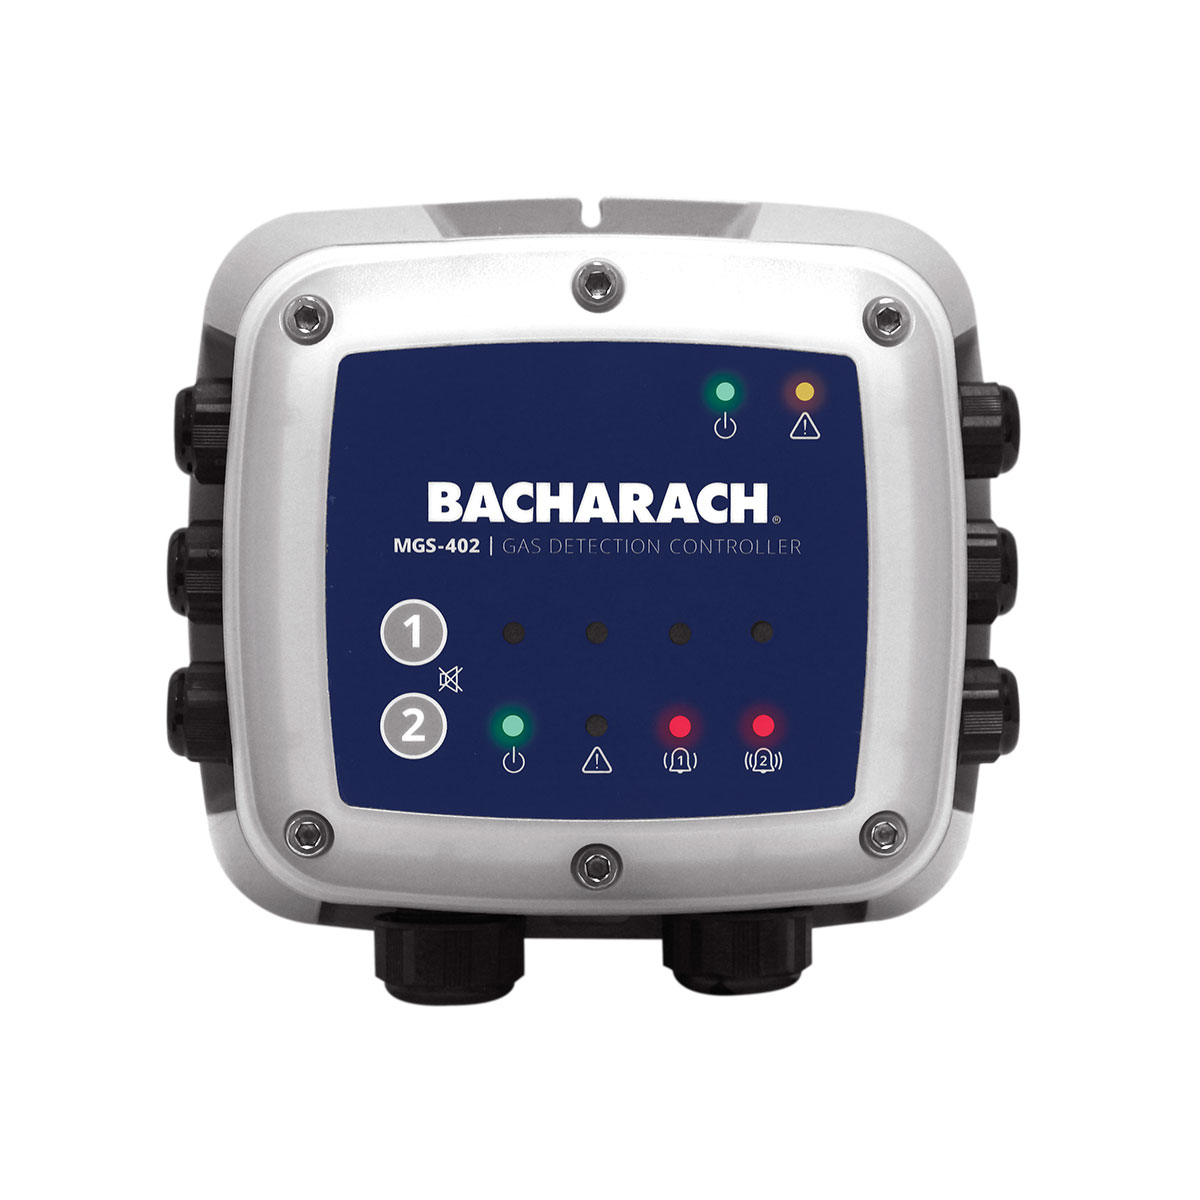 The Bacharach MGS-402 Gas Detector Controller